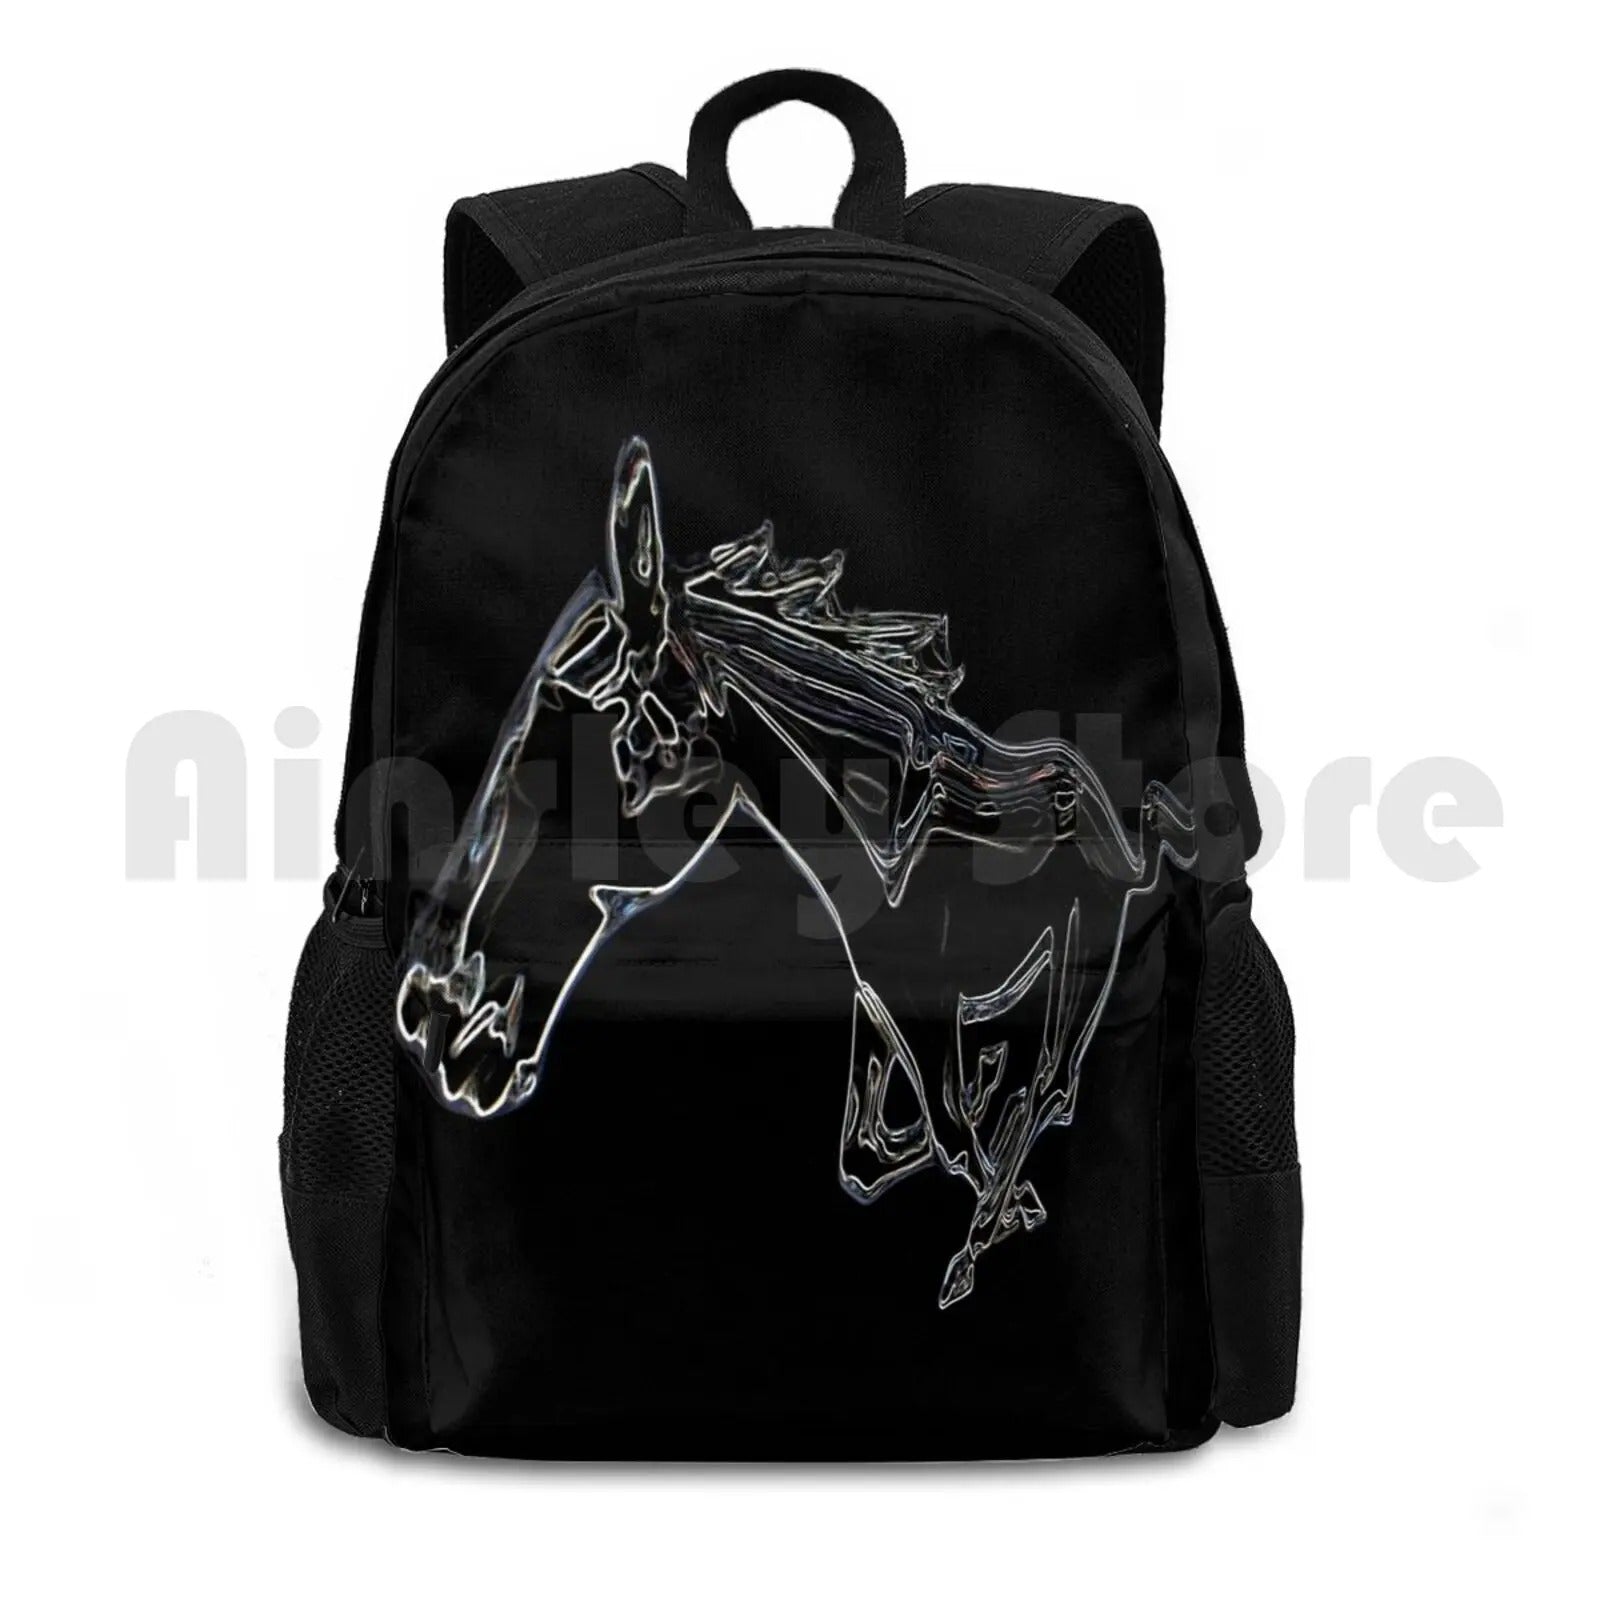 Backpack with Horse Logo - Backpack - Black